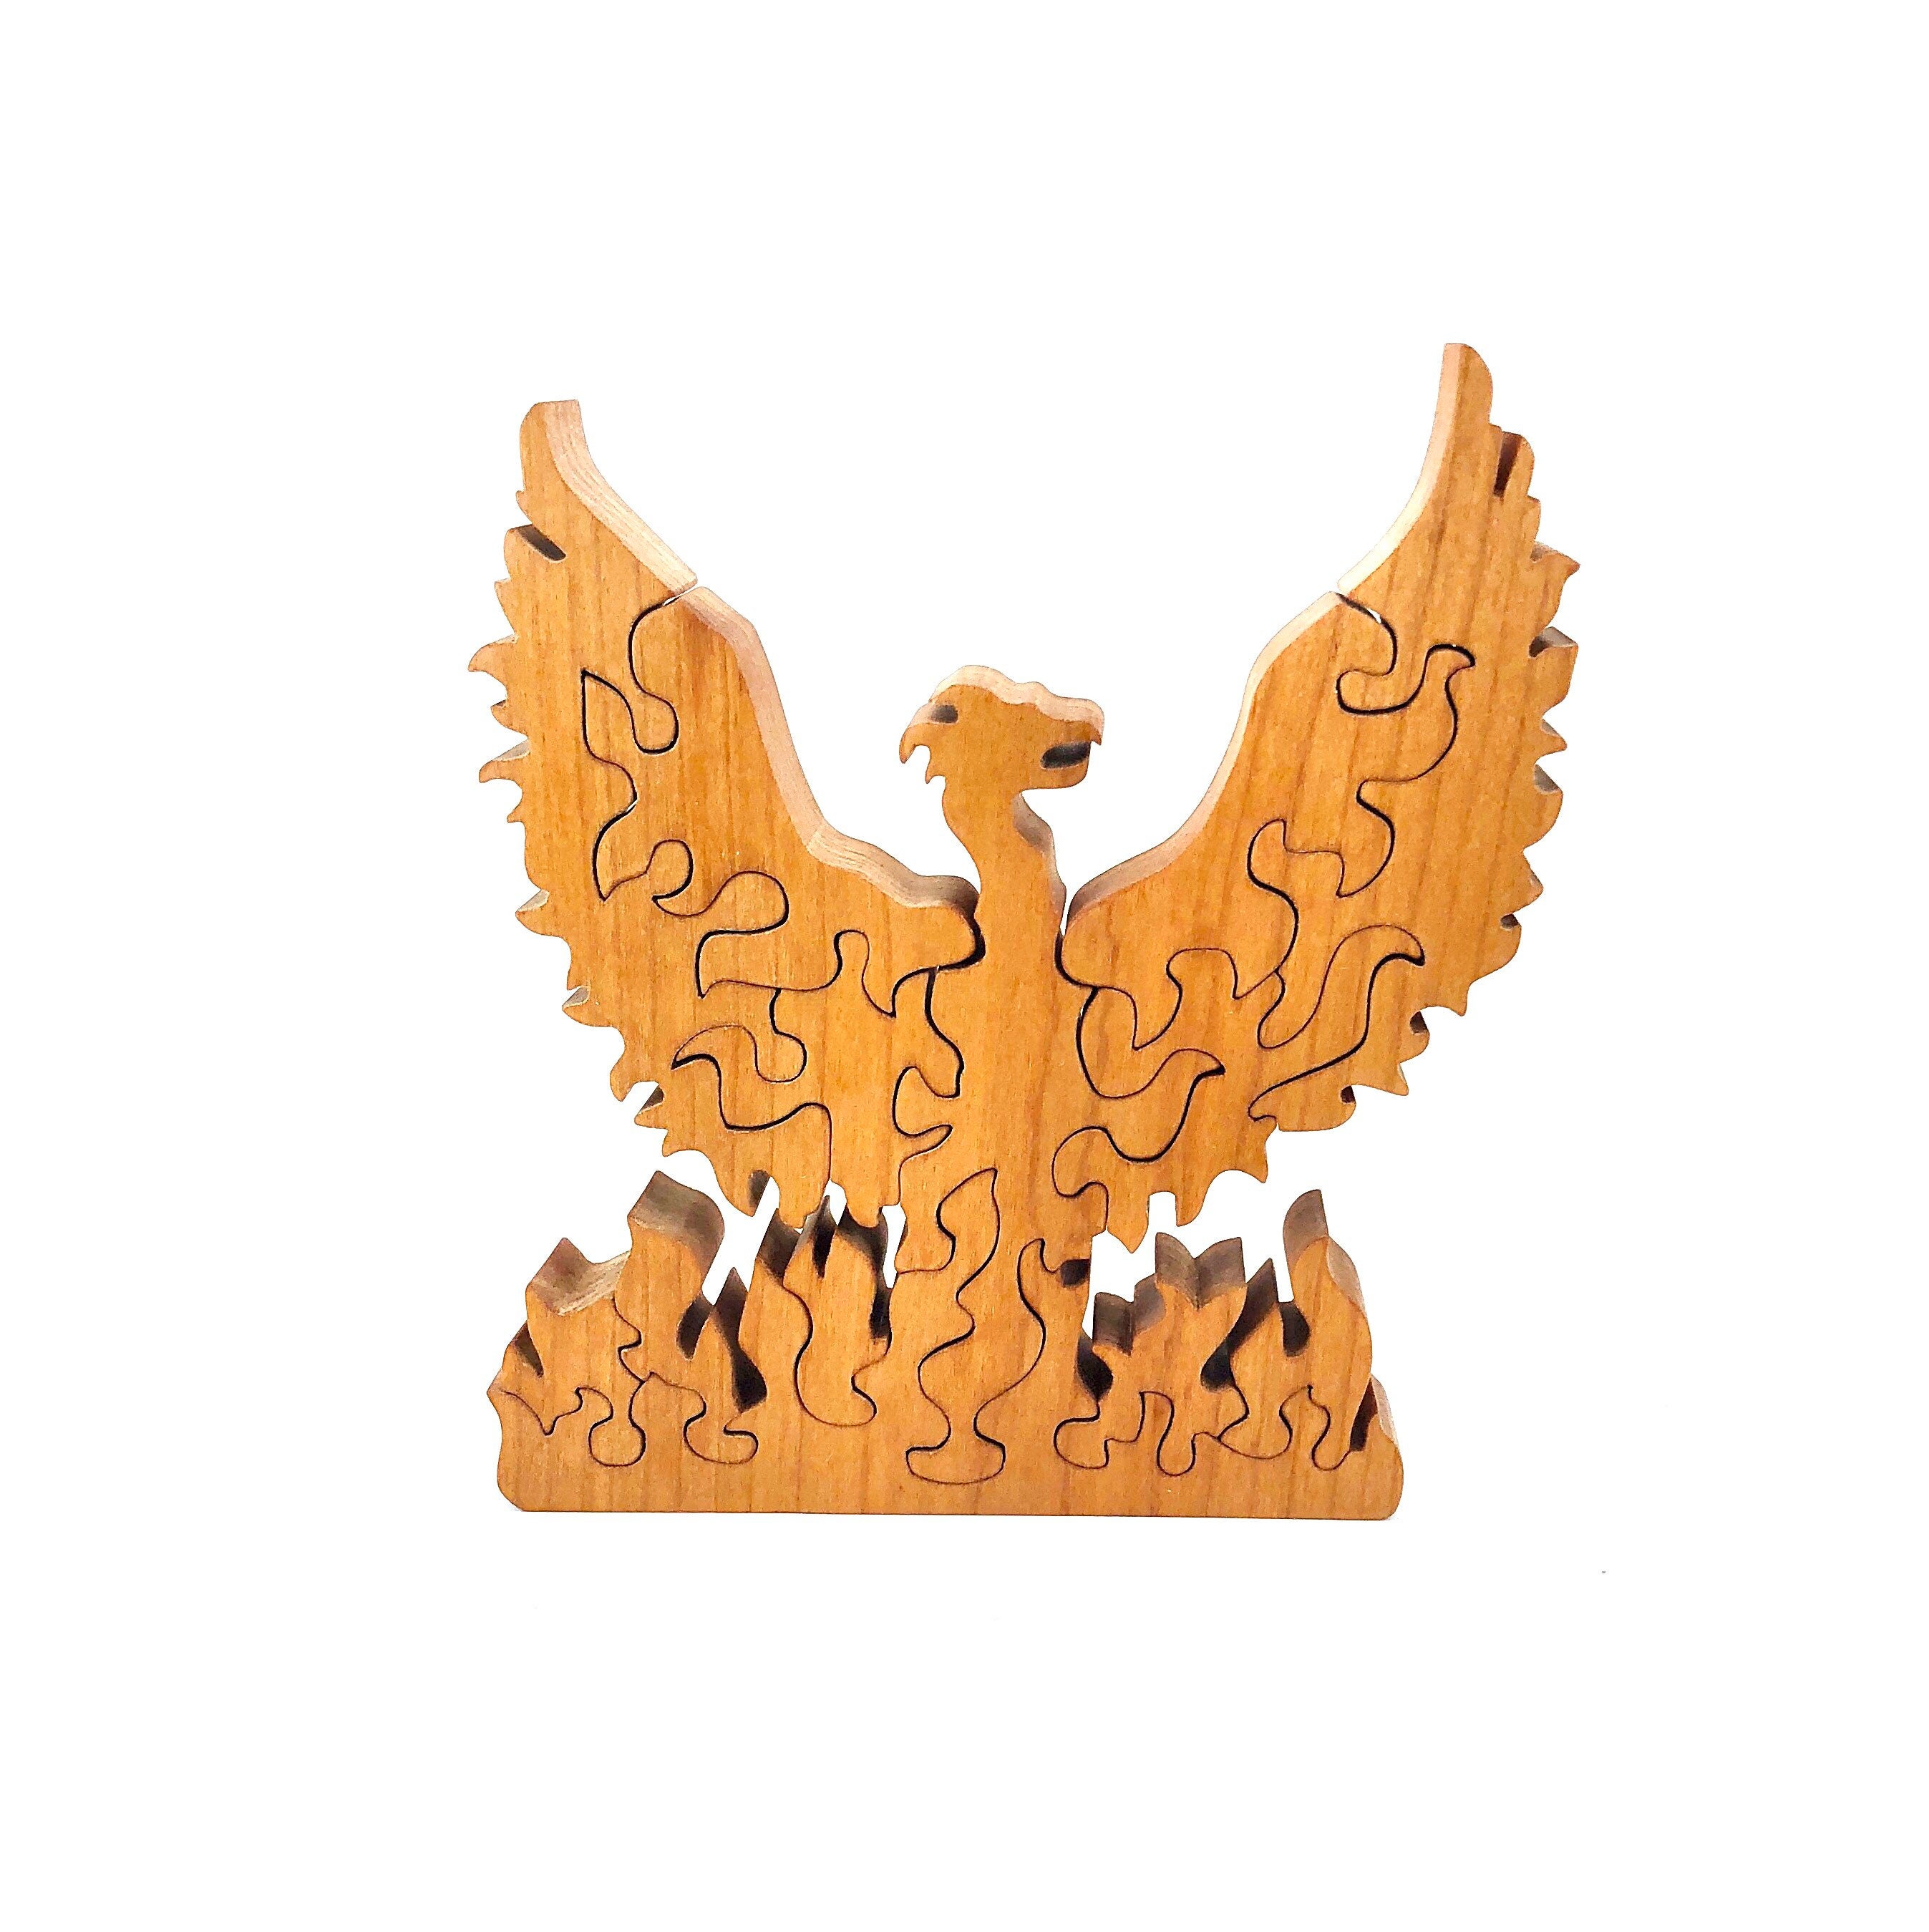 Puzzle animal en bois art créatif: Phénix Flamboyant REF/PC023